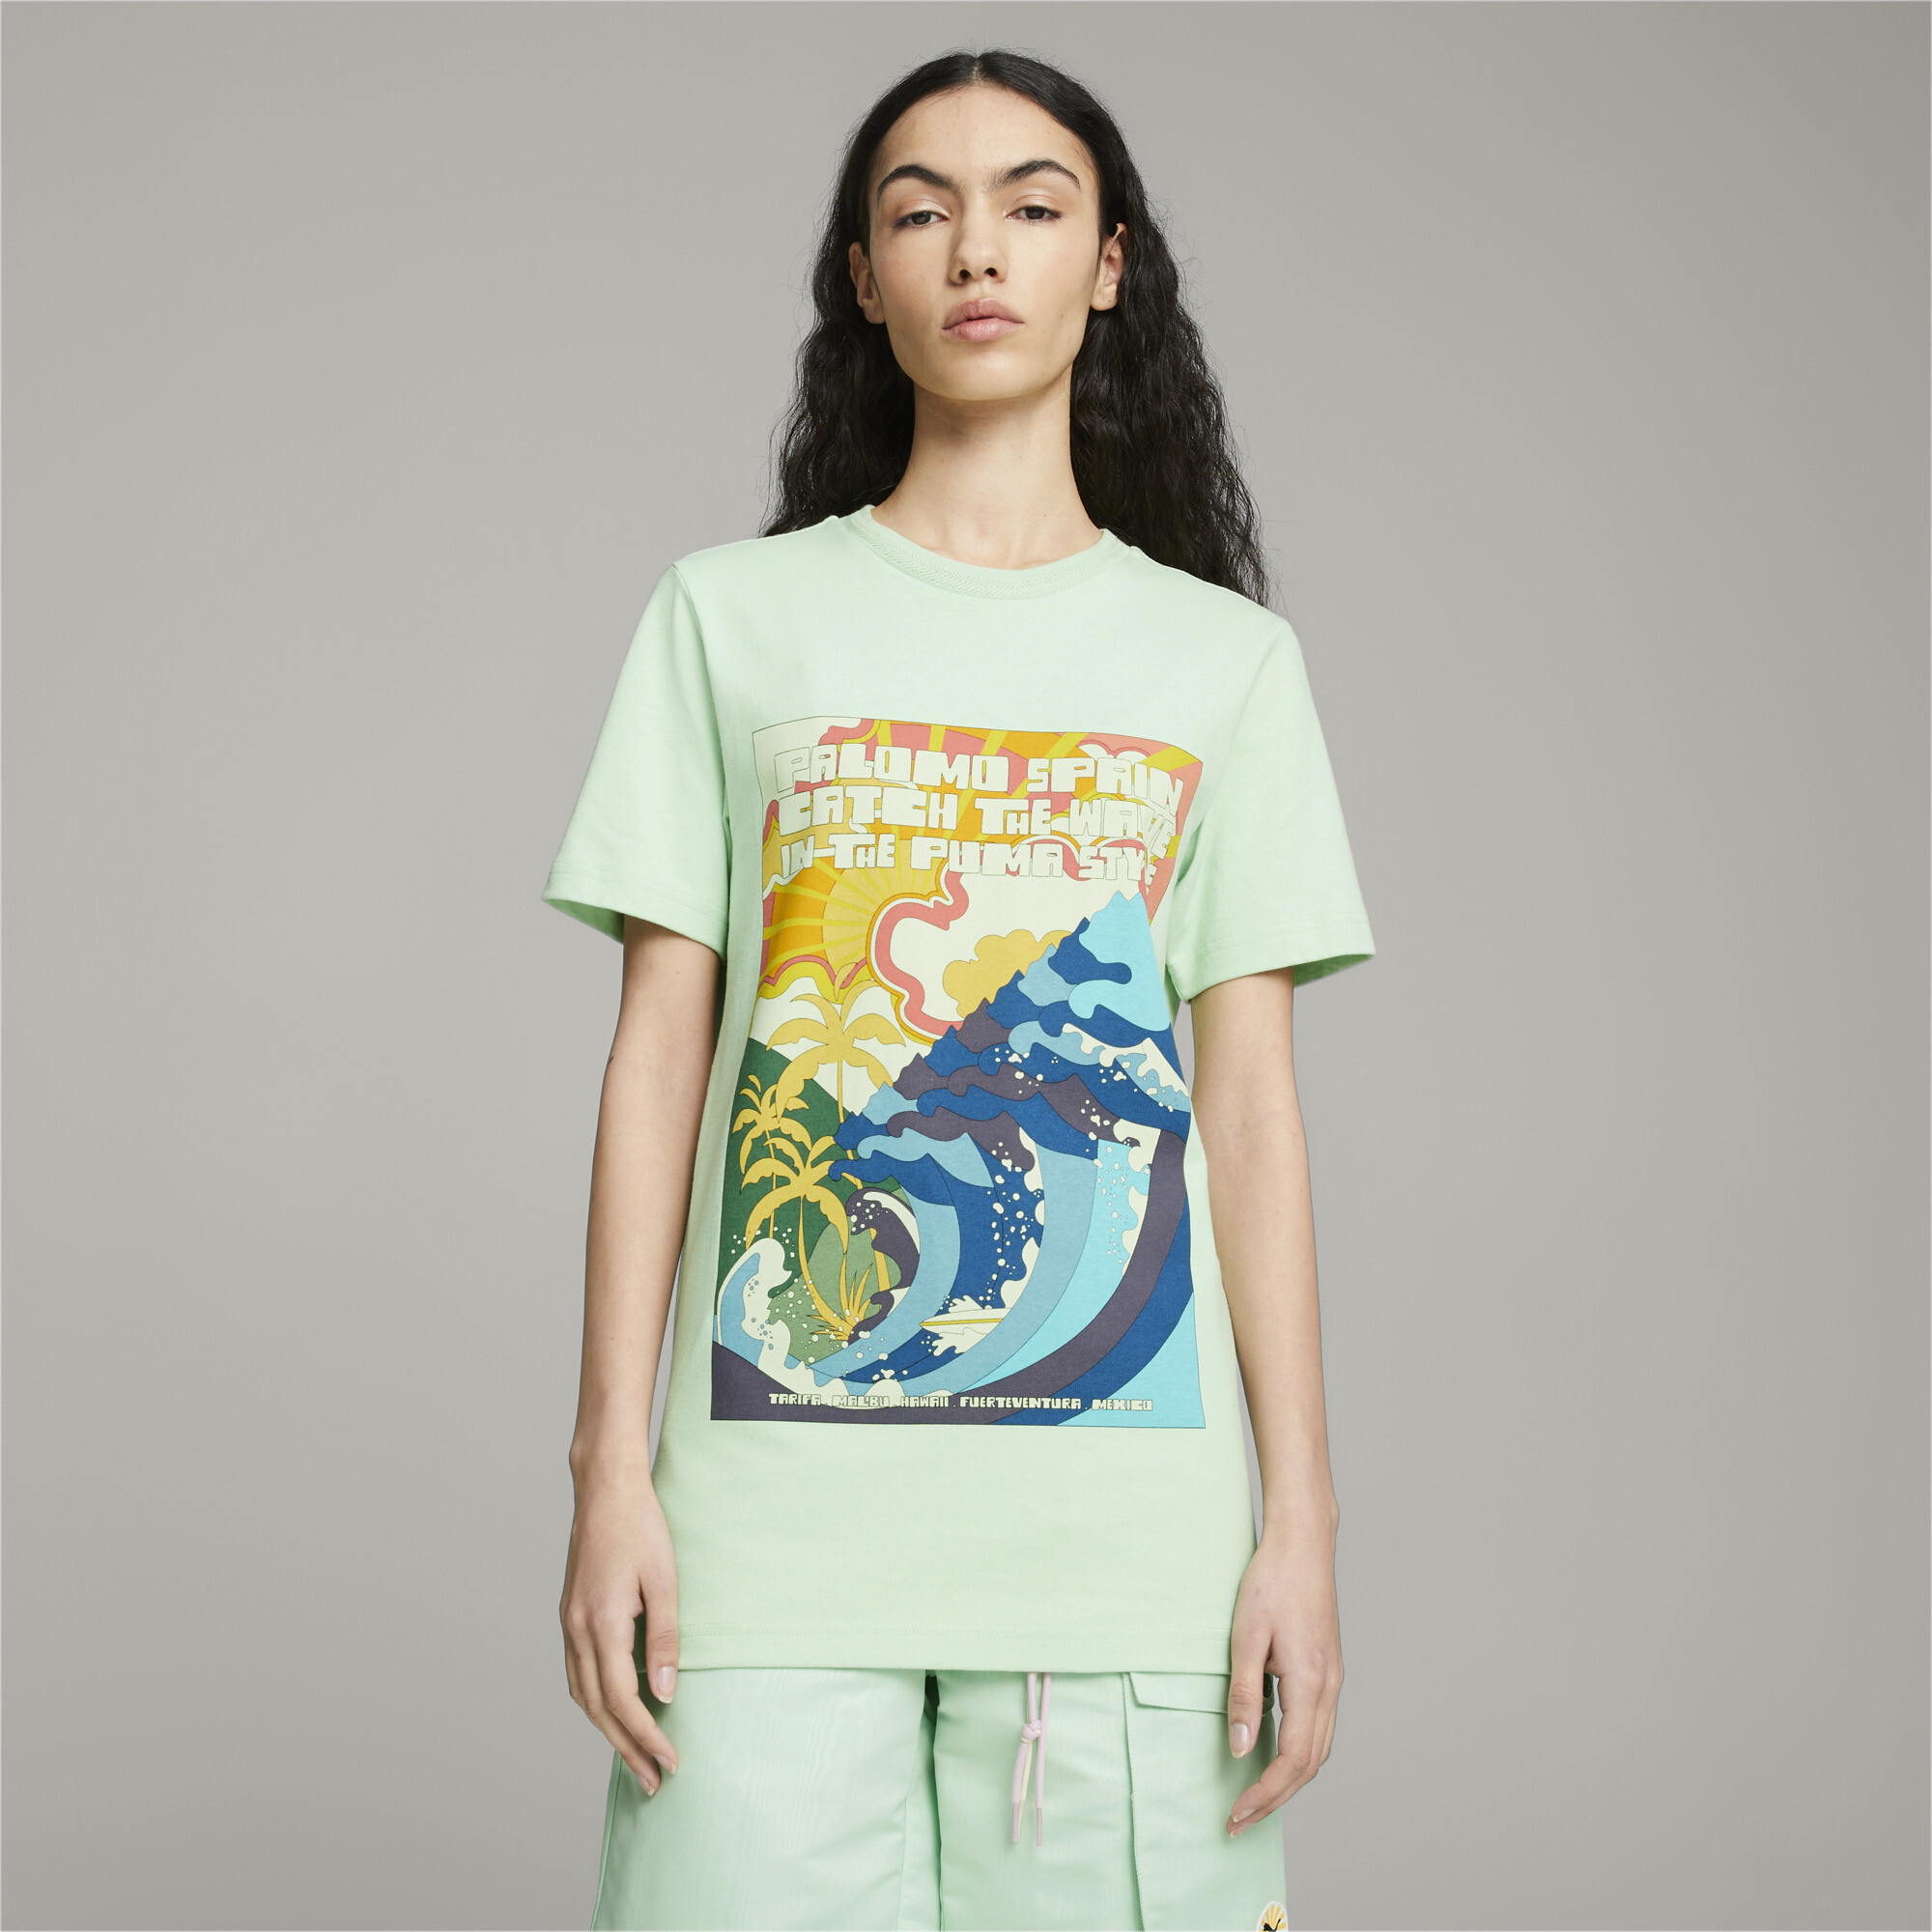 Men's PUMA X PALOMO Graphic T-Shirt In 40 - Green, Size XL